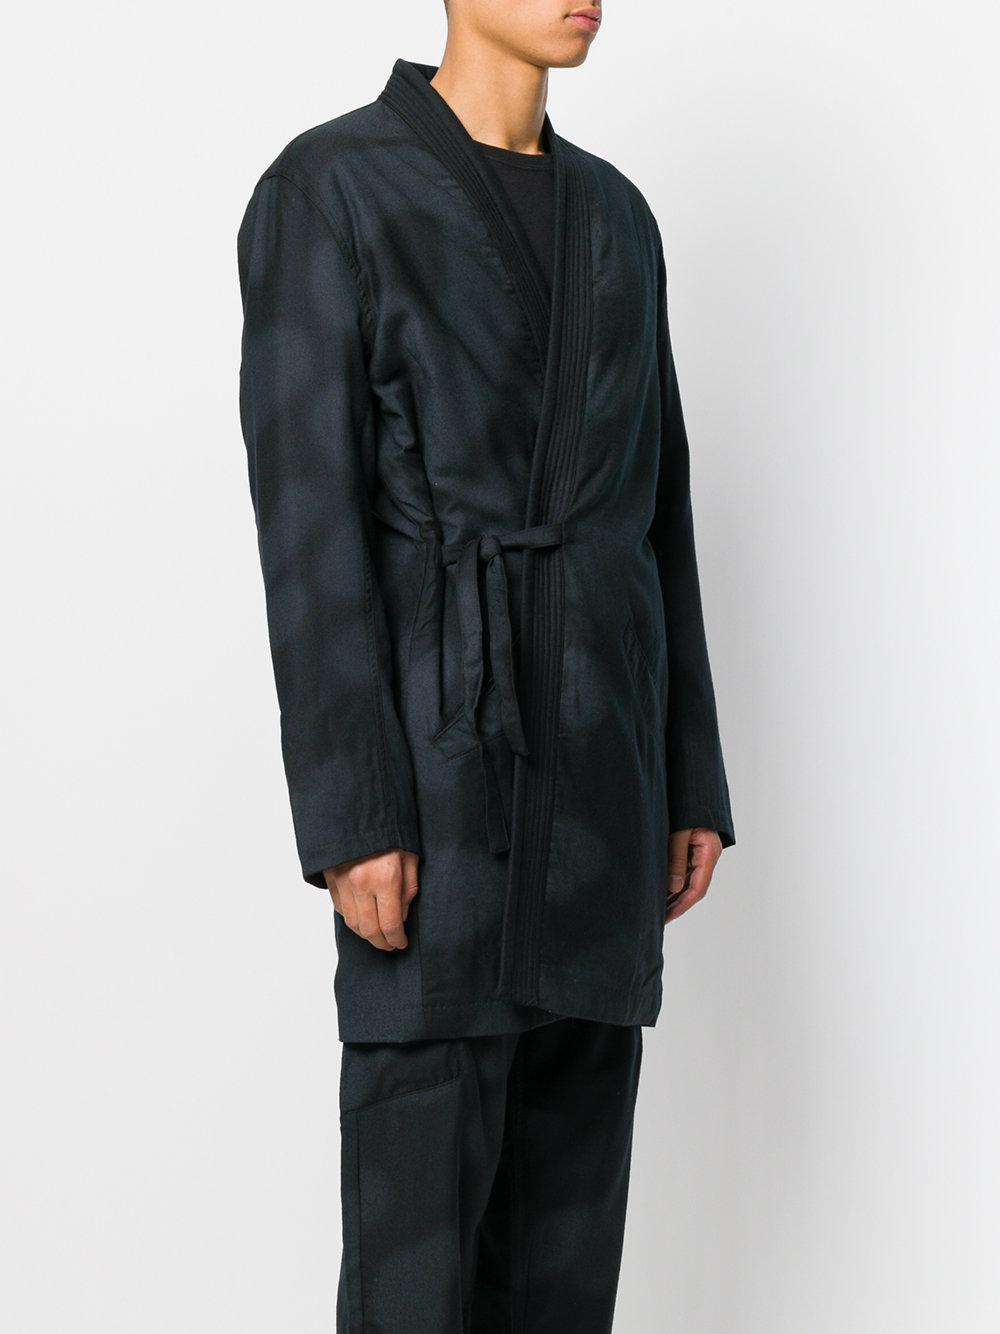 Maharishi Wool Camouflage Patter Coat in Black for Men - Lyst